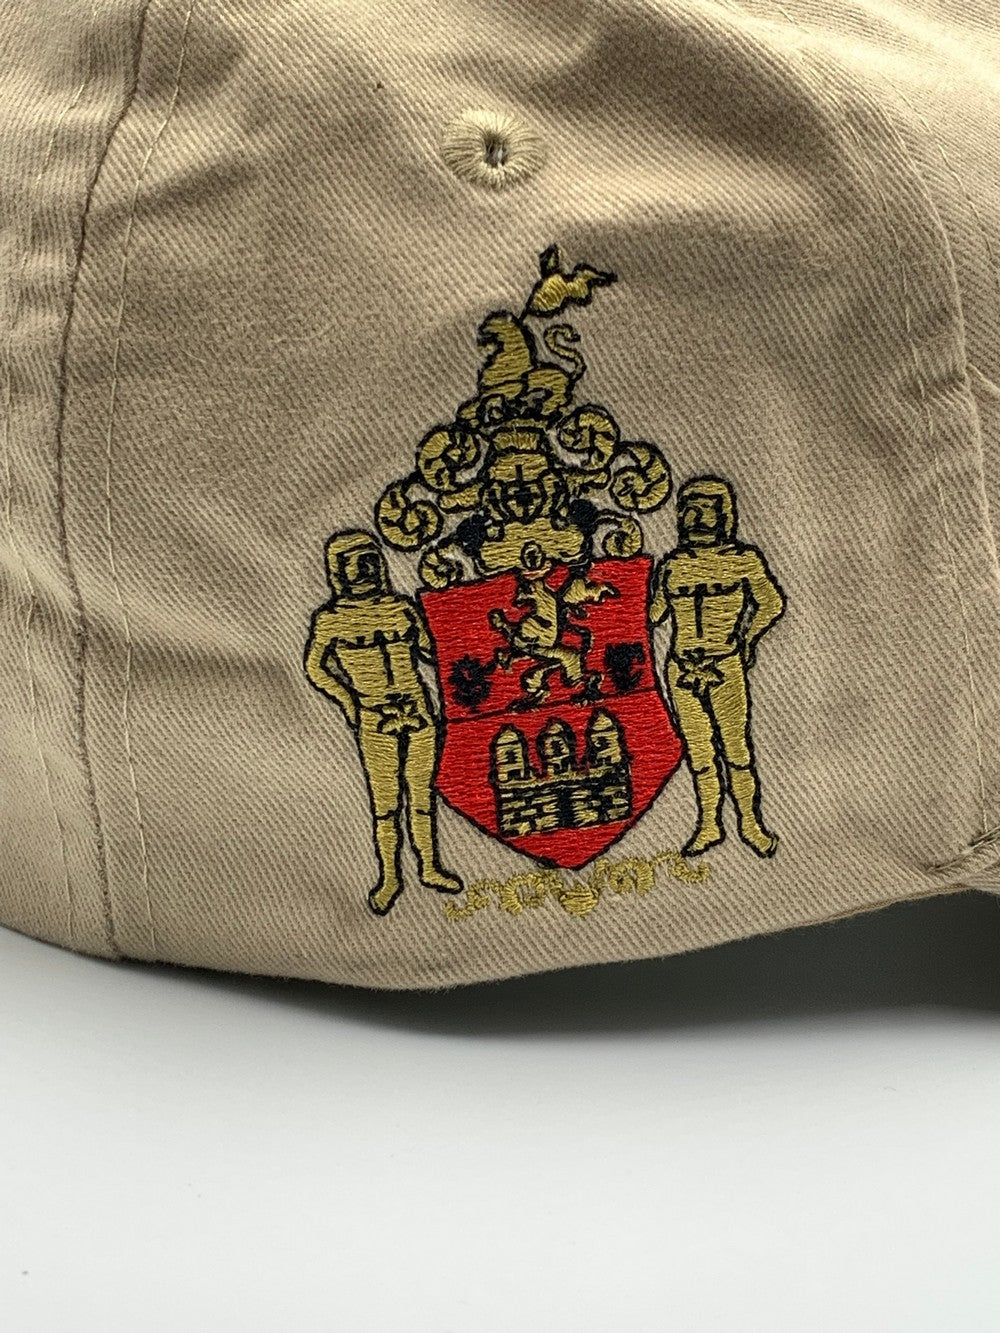 Buda Pest Branded Original Branded Caps For Men